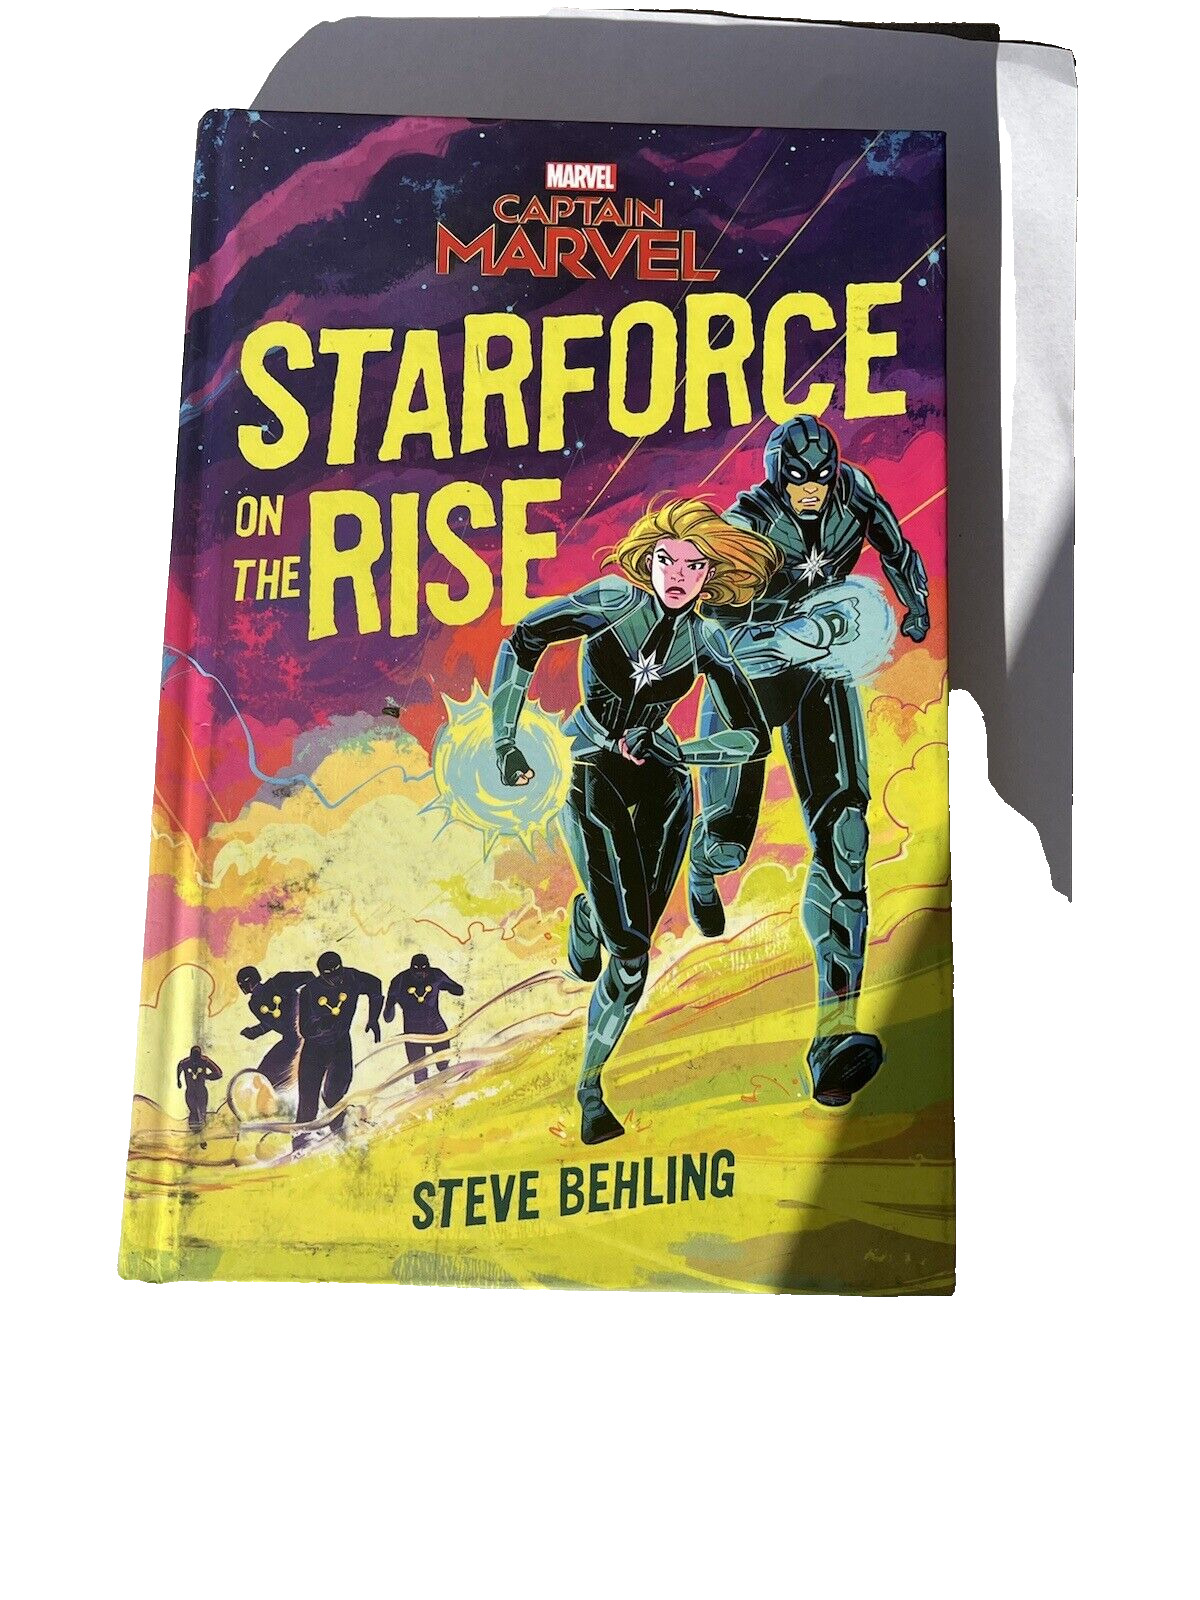 Grab Now Star Force On The Rise~ Captain Marvel : Steve Behling